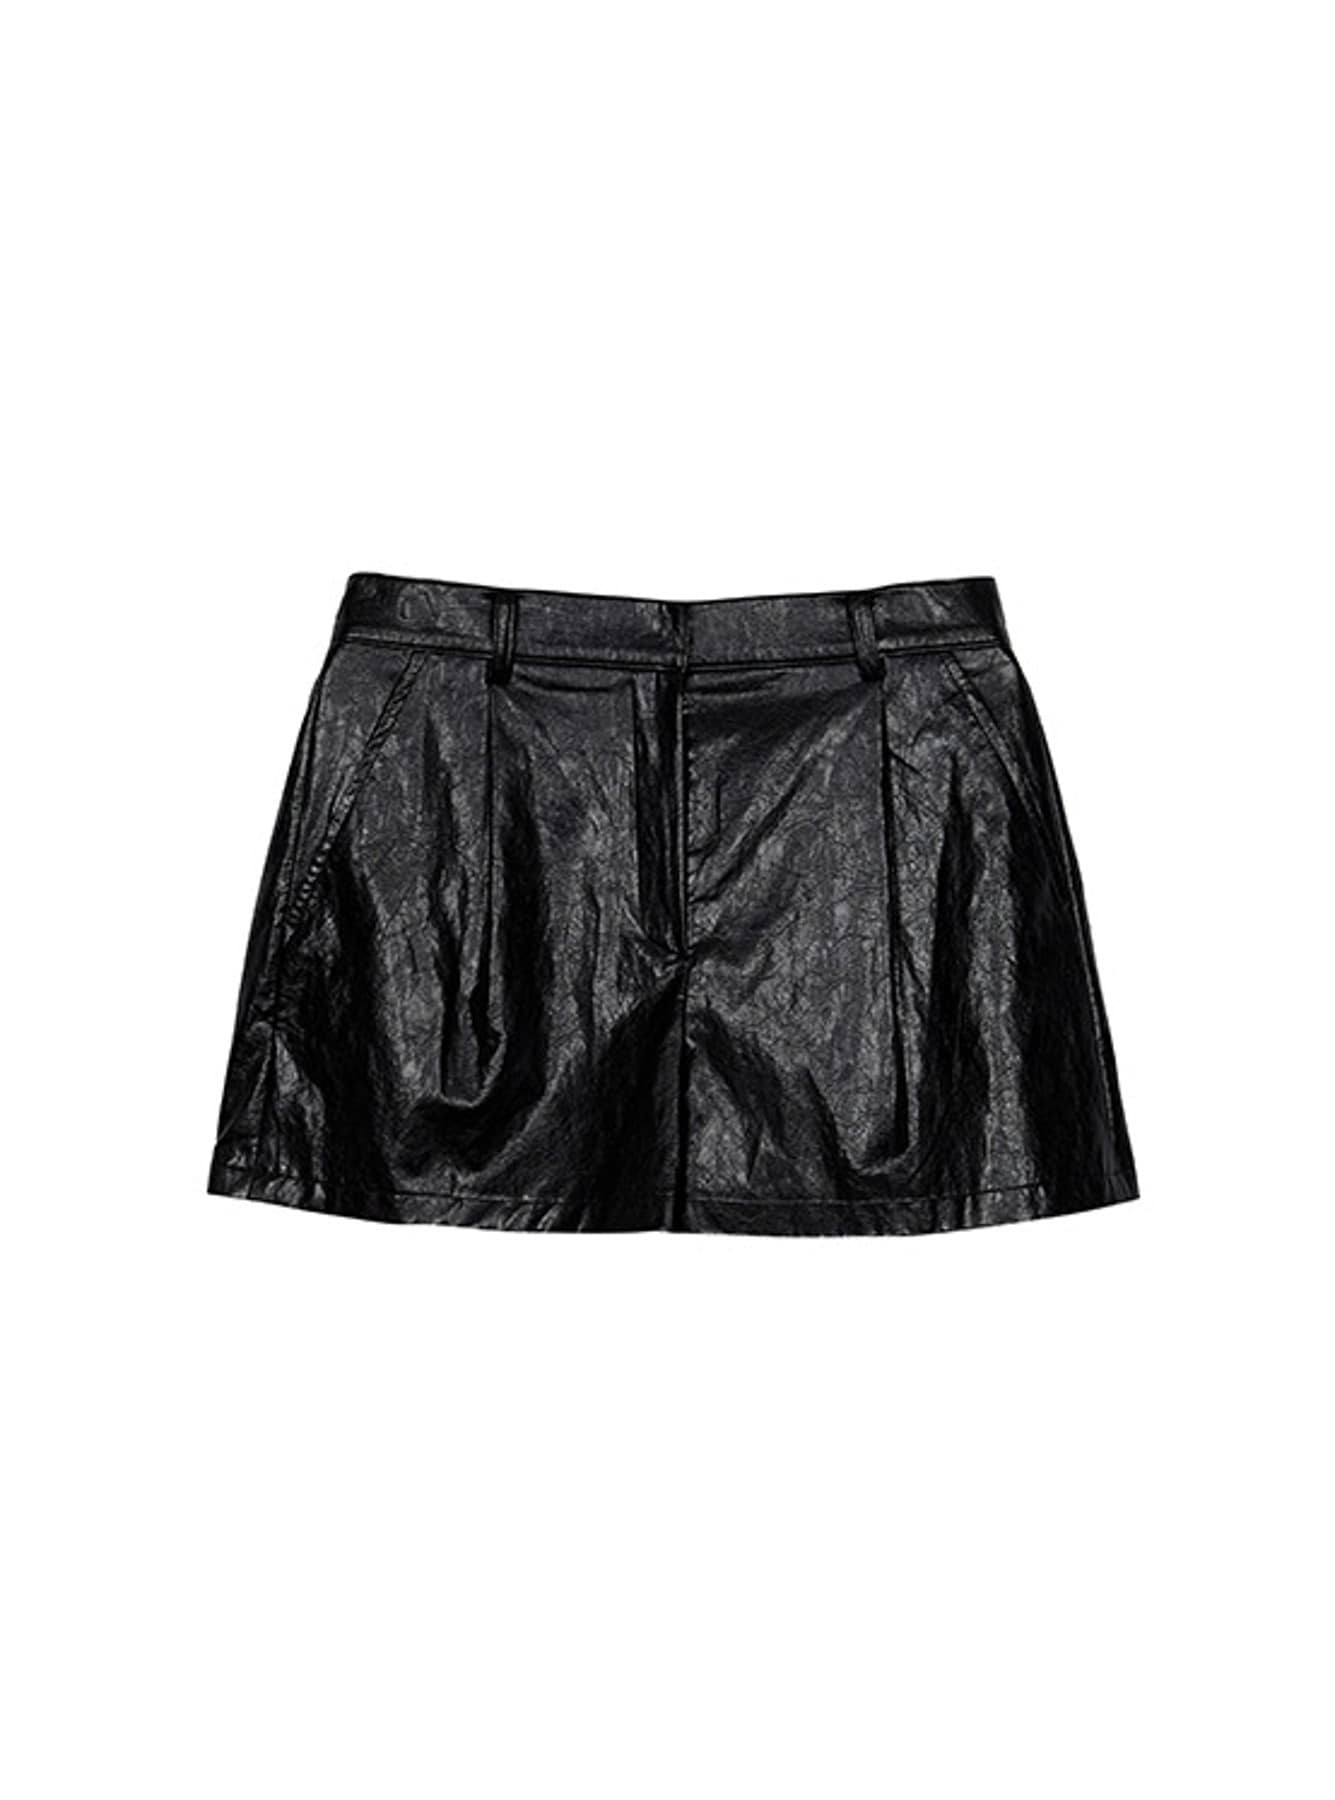 Fake Leather Short Pants in Black VL2AL411-10